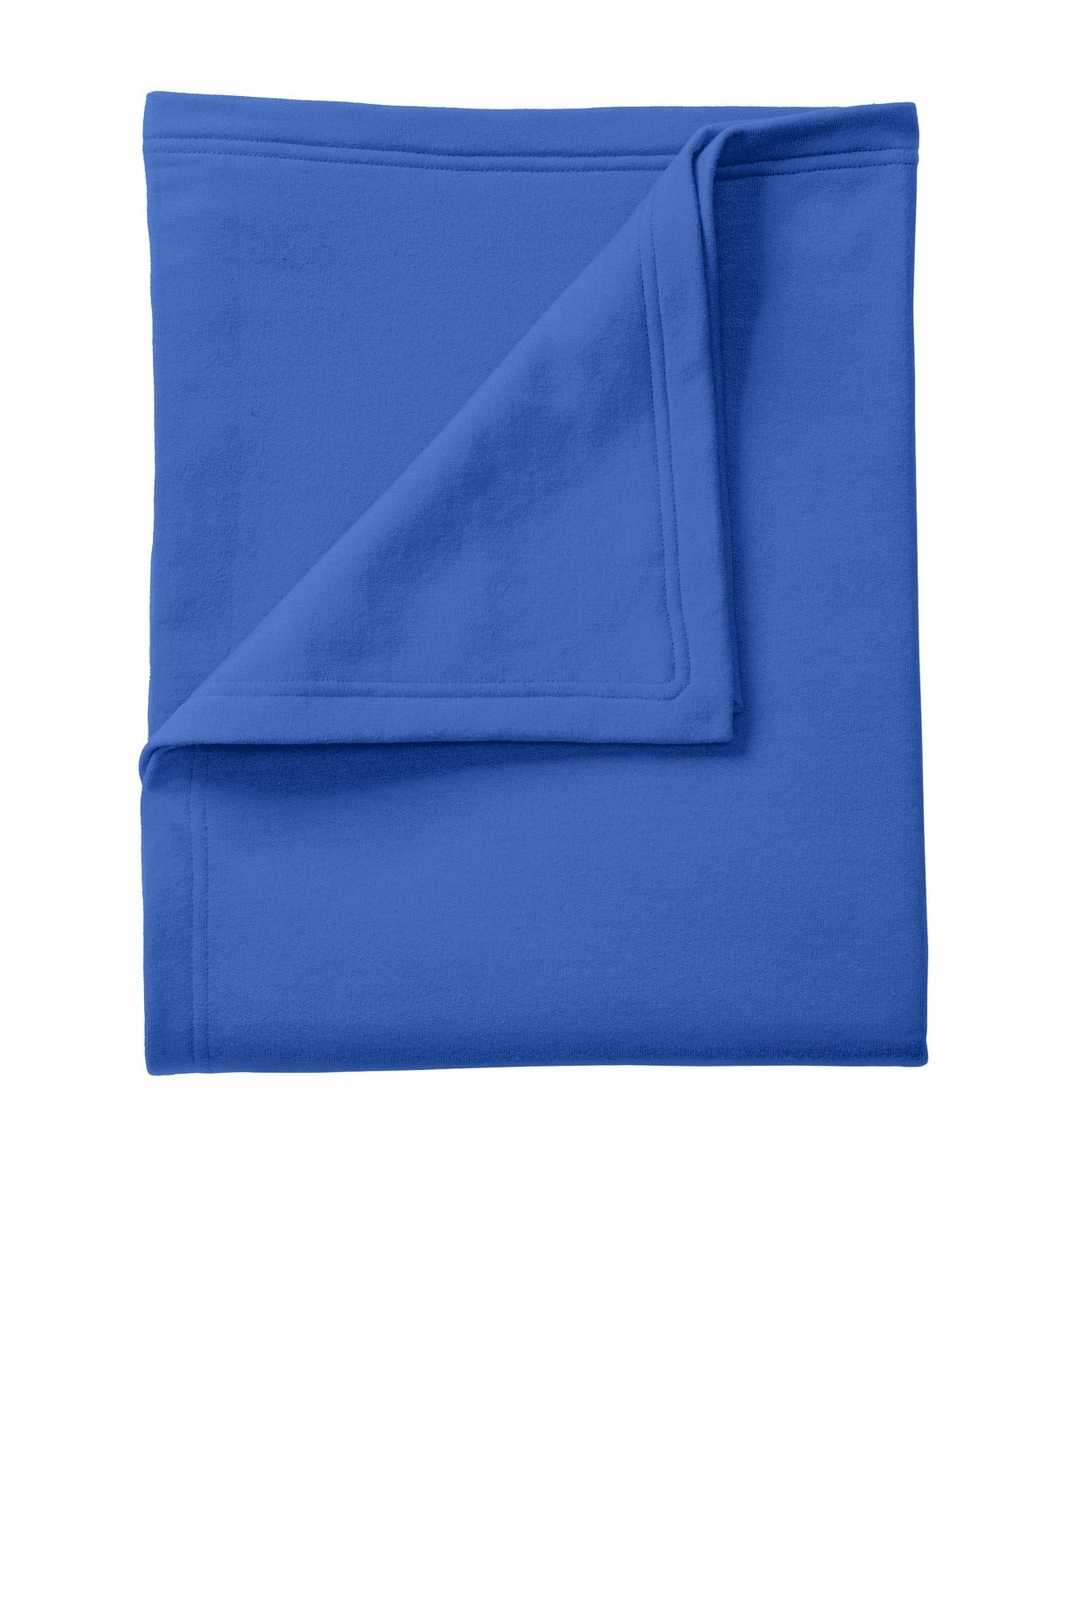 Port & Company BP78 Core Fleece Sweatshirt Blanket - Royal - HIT a Double - 1